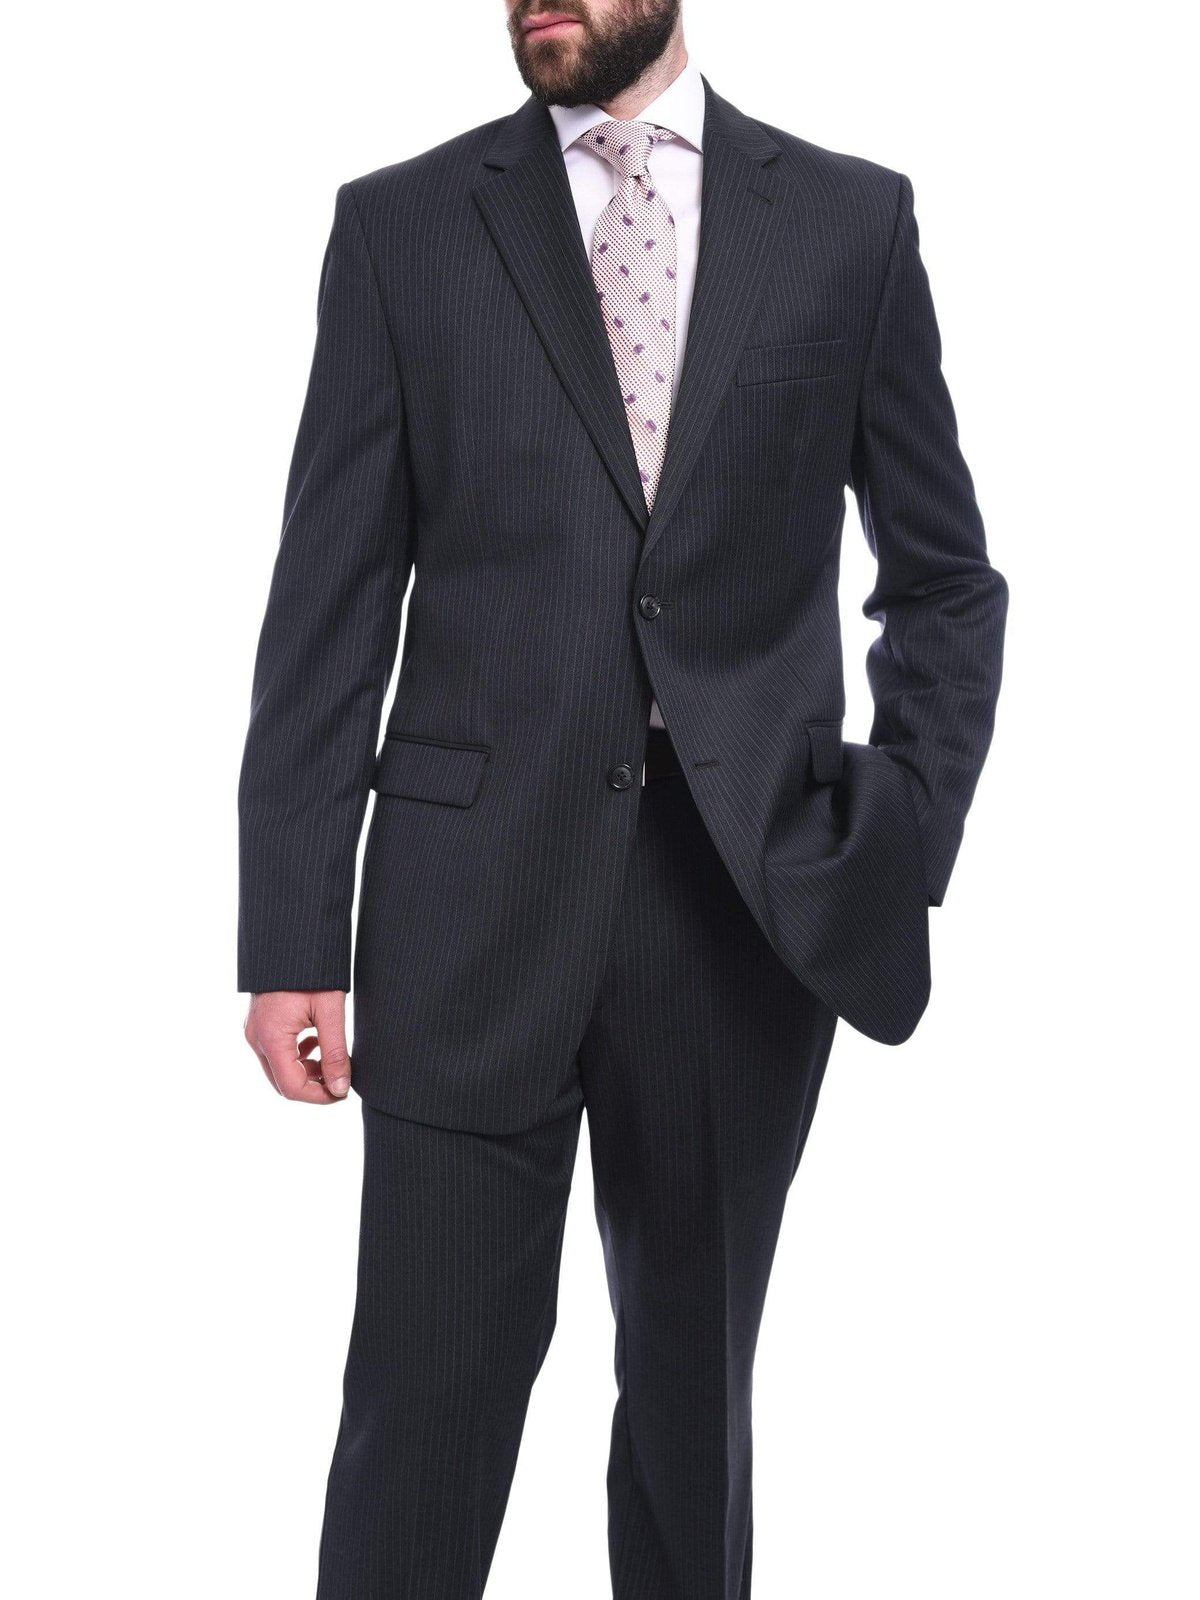 Bruno Piattelli 36S 30W Bruno Piattelli Classic Fit Charcoal Gray Pinstriped Two Button Wool Suit